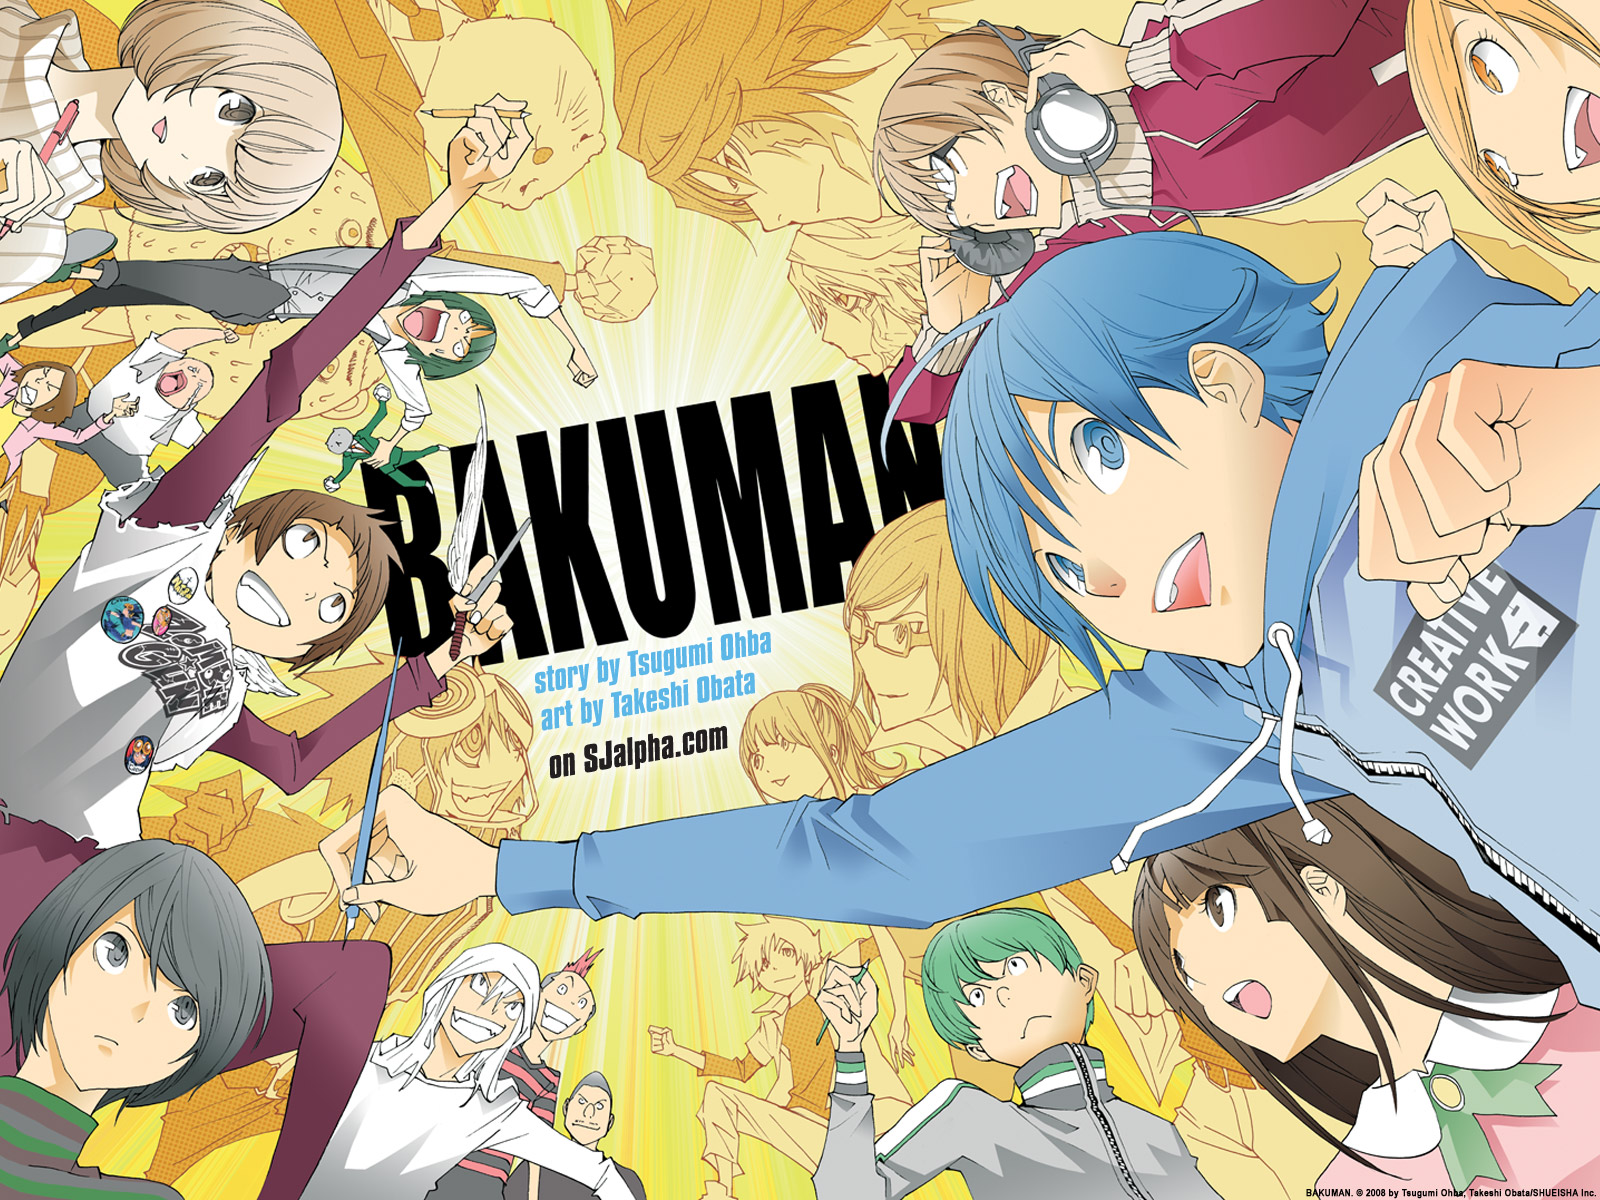 611143 descargar imagen animado, bakuman: fondos de pantalla y protectores de pantalla gratis